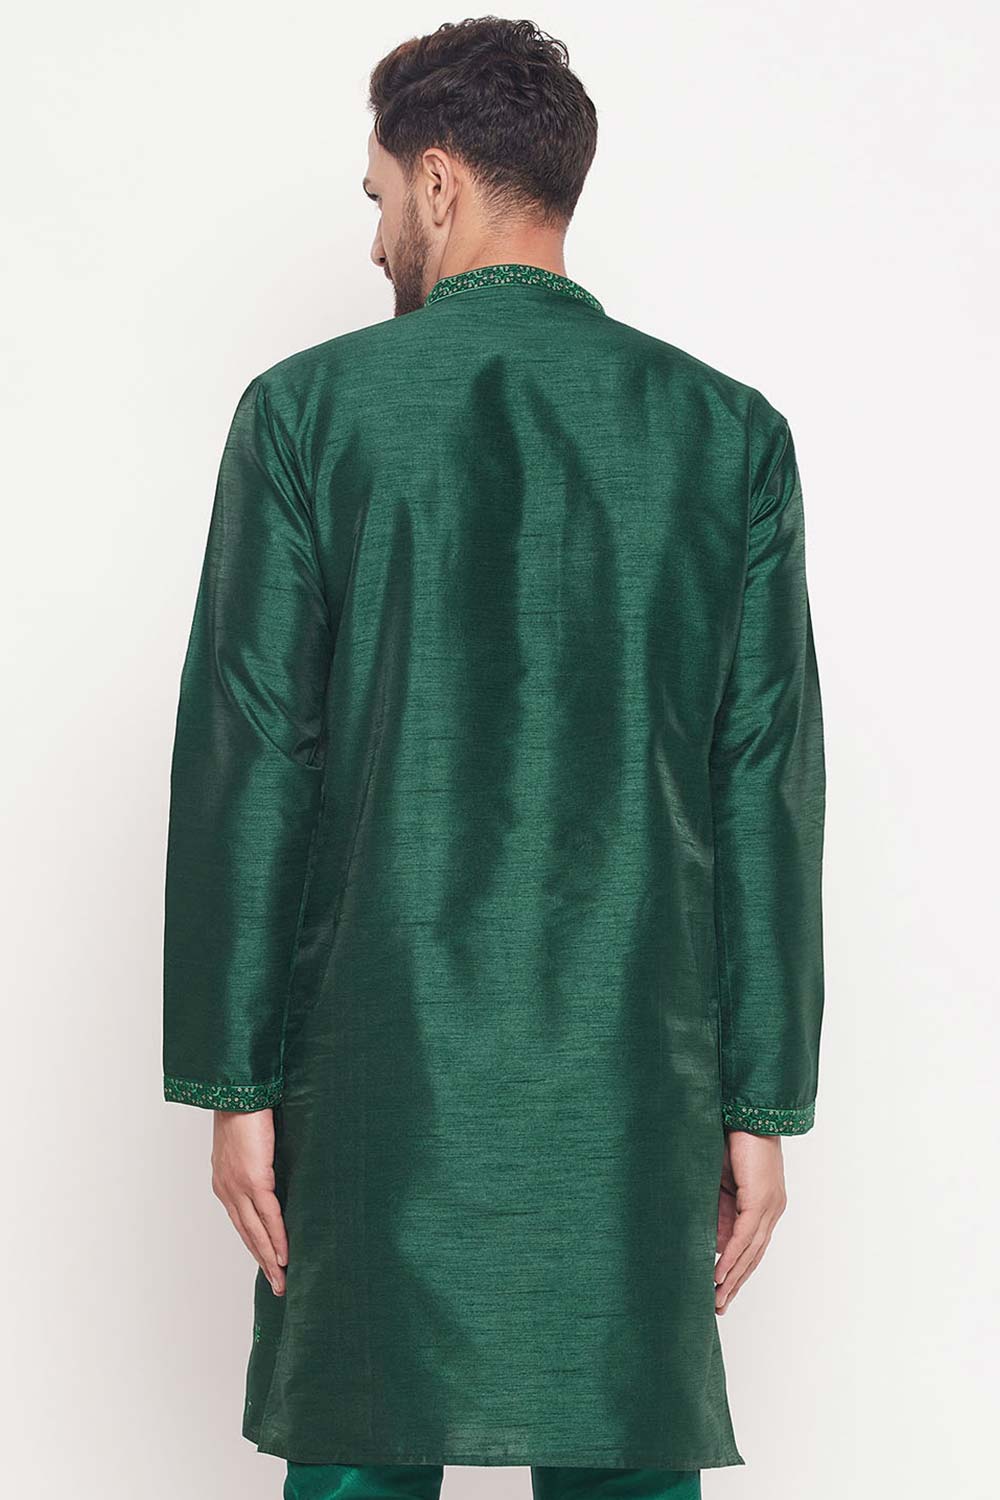 Buy Men's Green Silk Blend Ethnic Motif Woven Design Short Kurta Online - Front